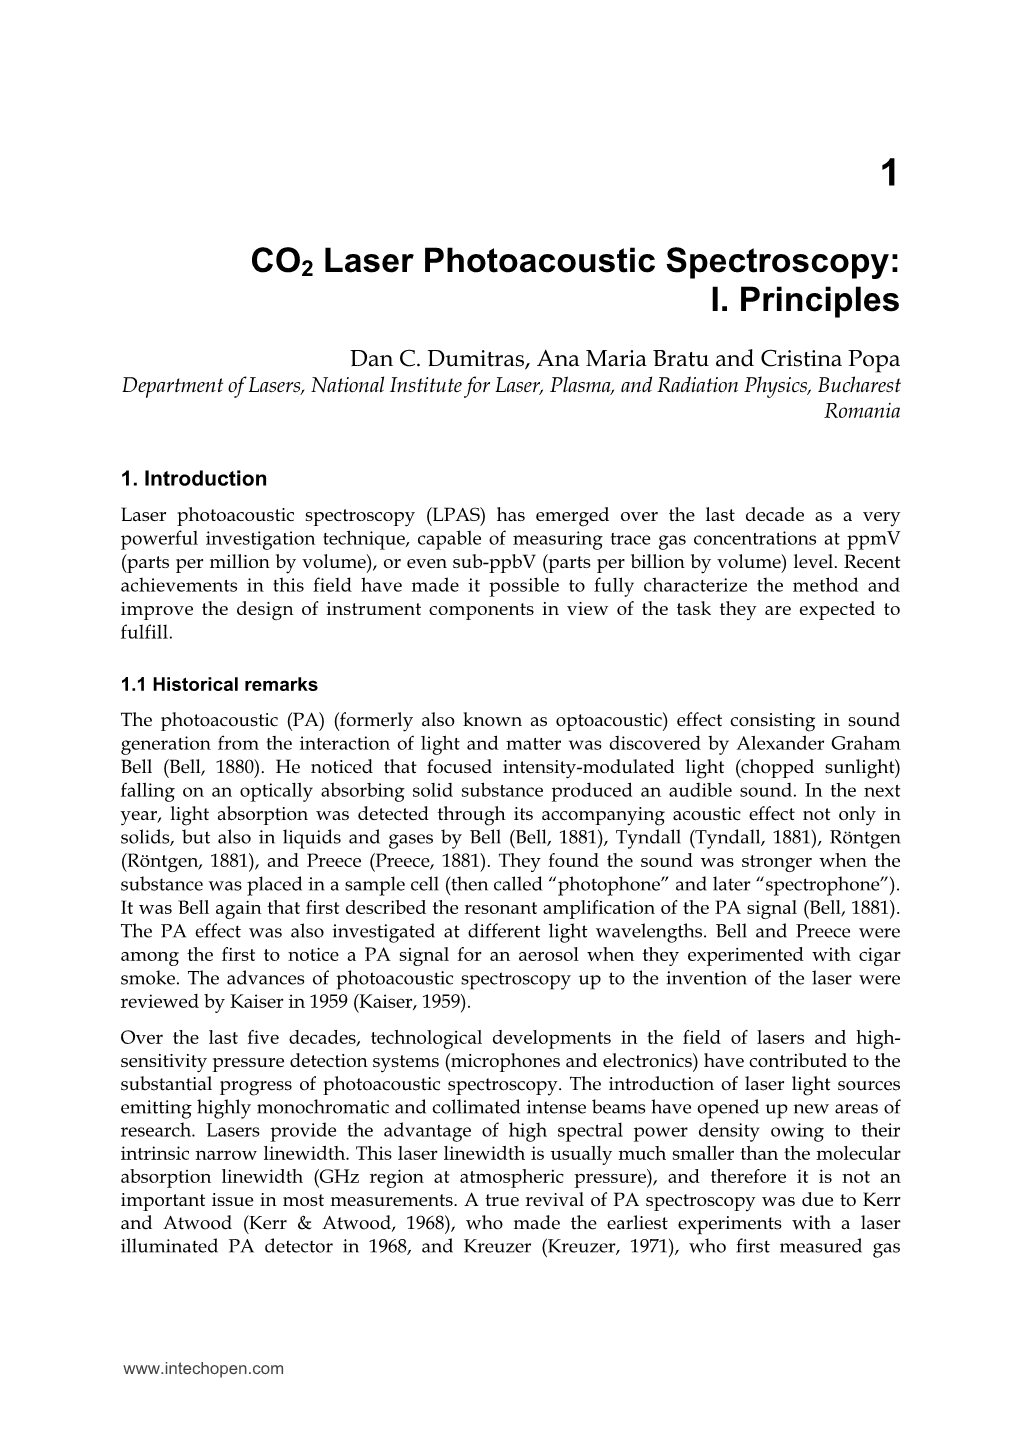 CO2 Laser Photoacoustic Spectroscopy: I. Principles